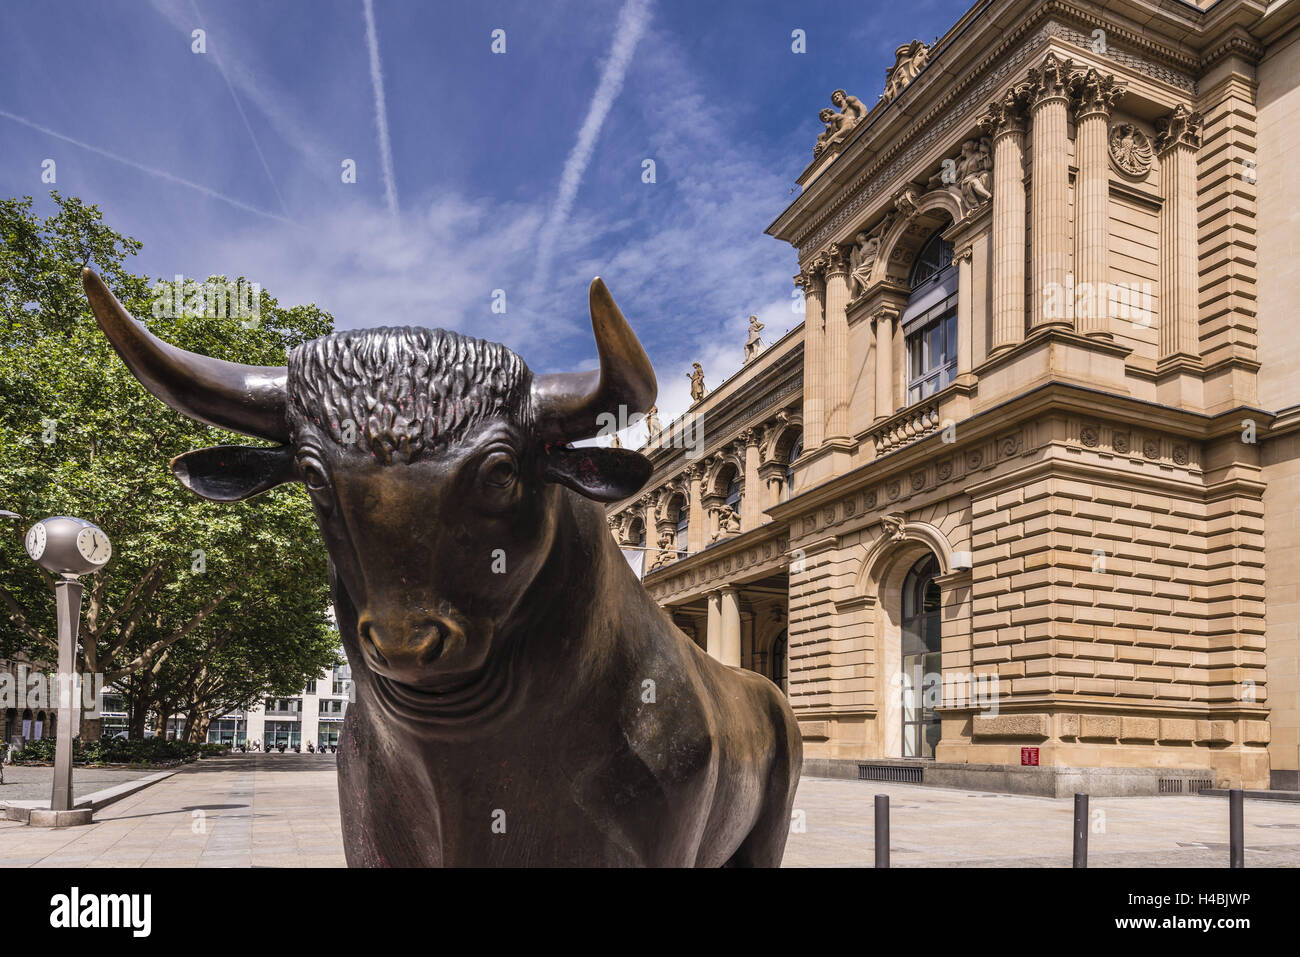 Germany, Hessen, Frankfurt am Main, Exchange Place, Bull sculpture with Frankfurter Wertpapierbörse, Stock Photo